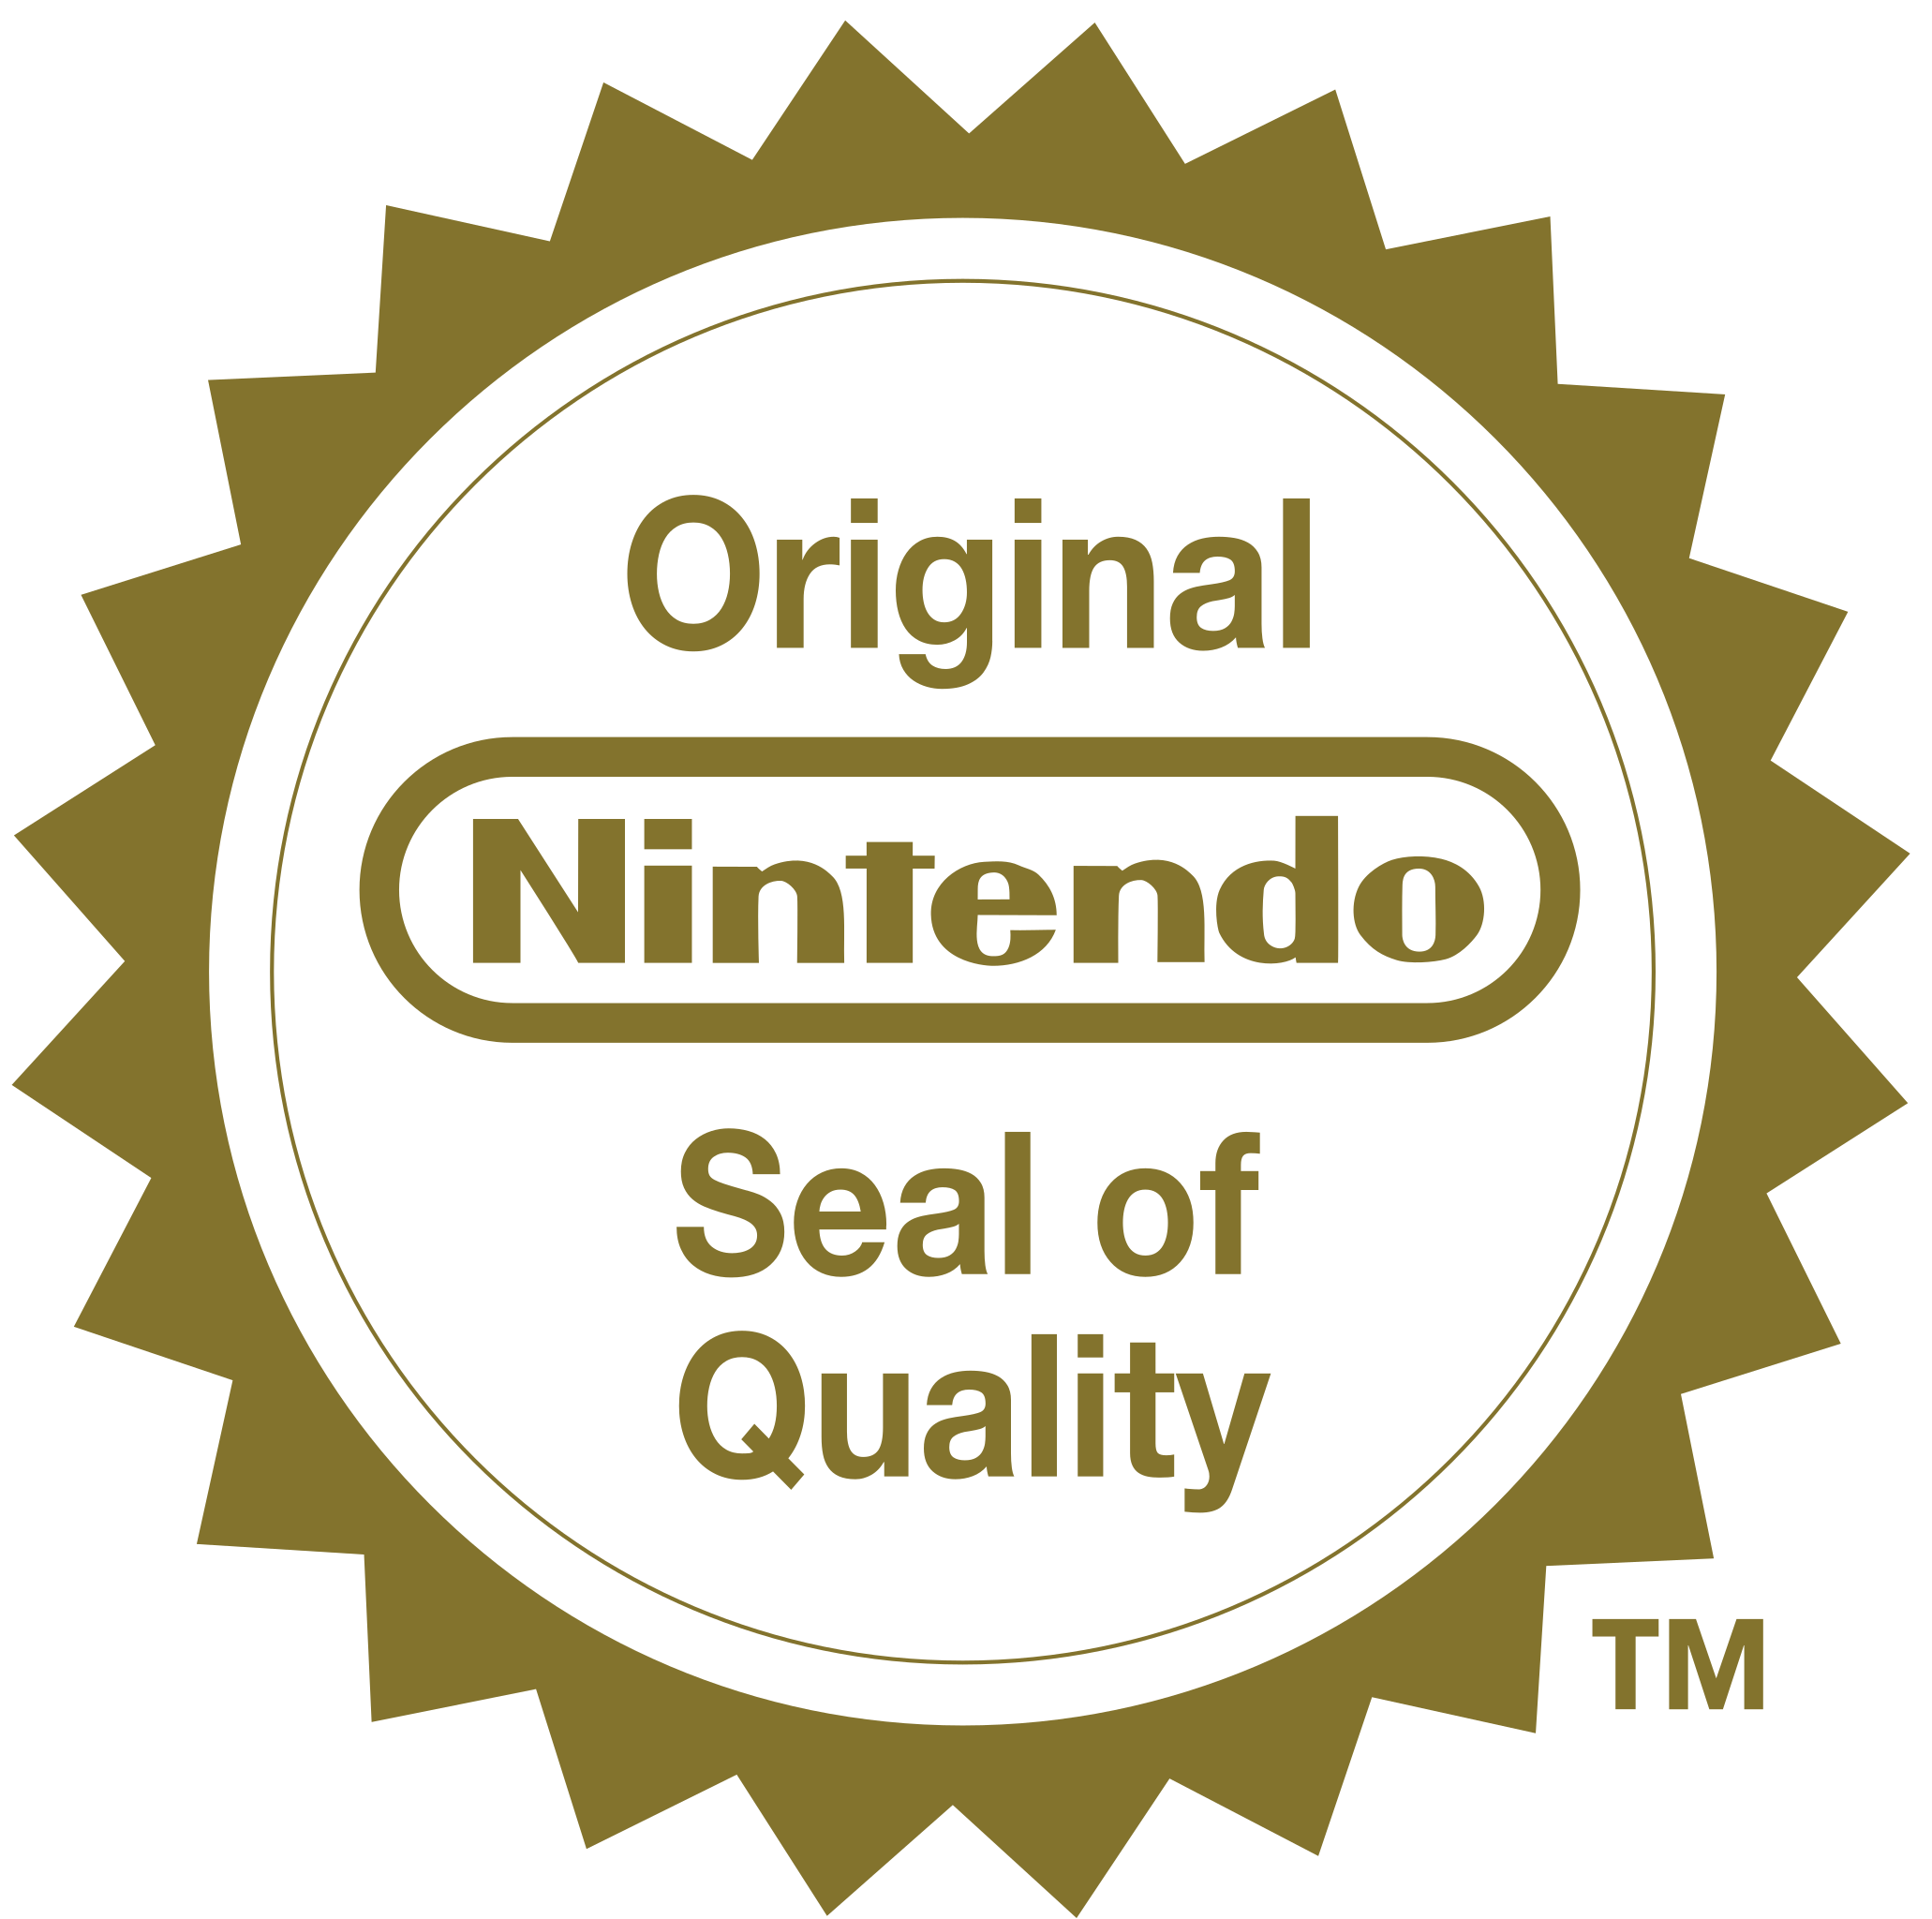 Original_Nintendo_Seal_of_Quality.png